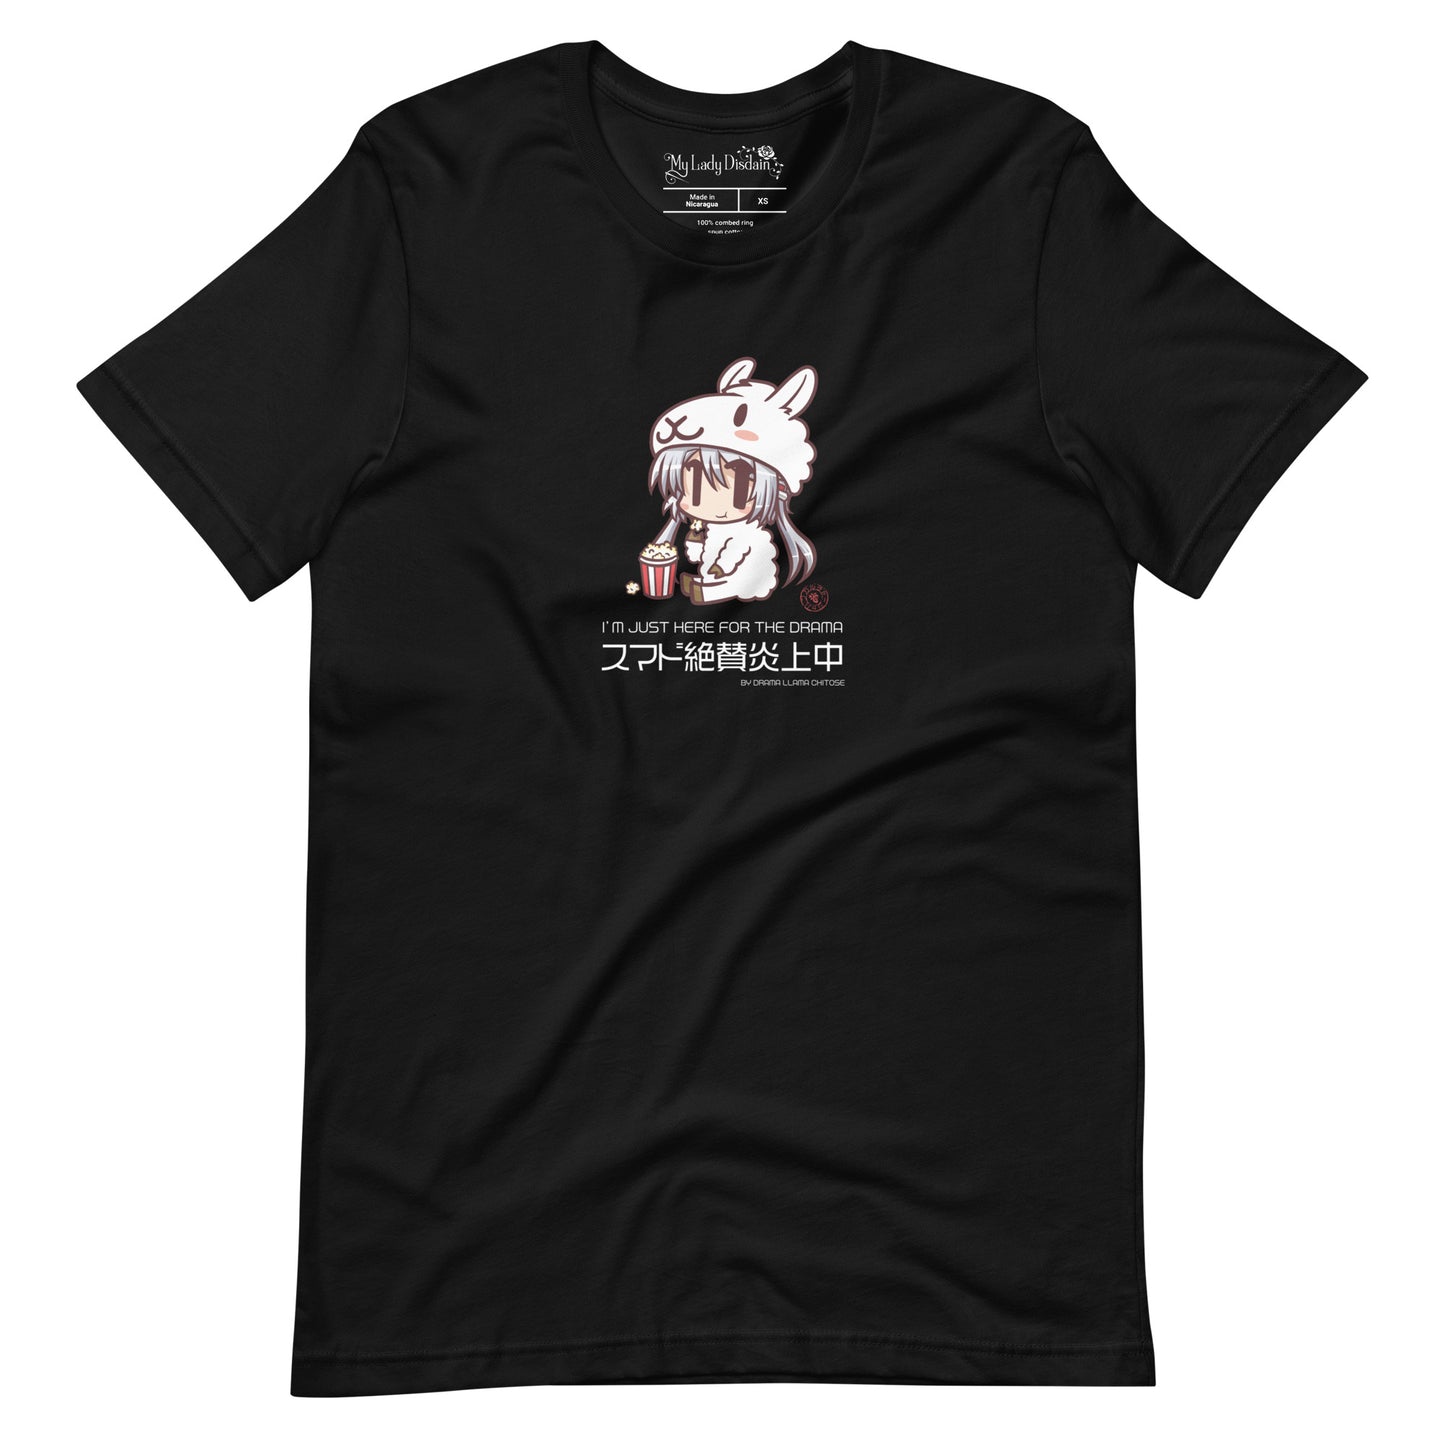 Drama Llama - Unisex T-Shirt